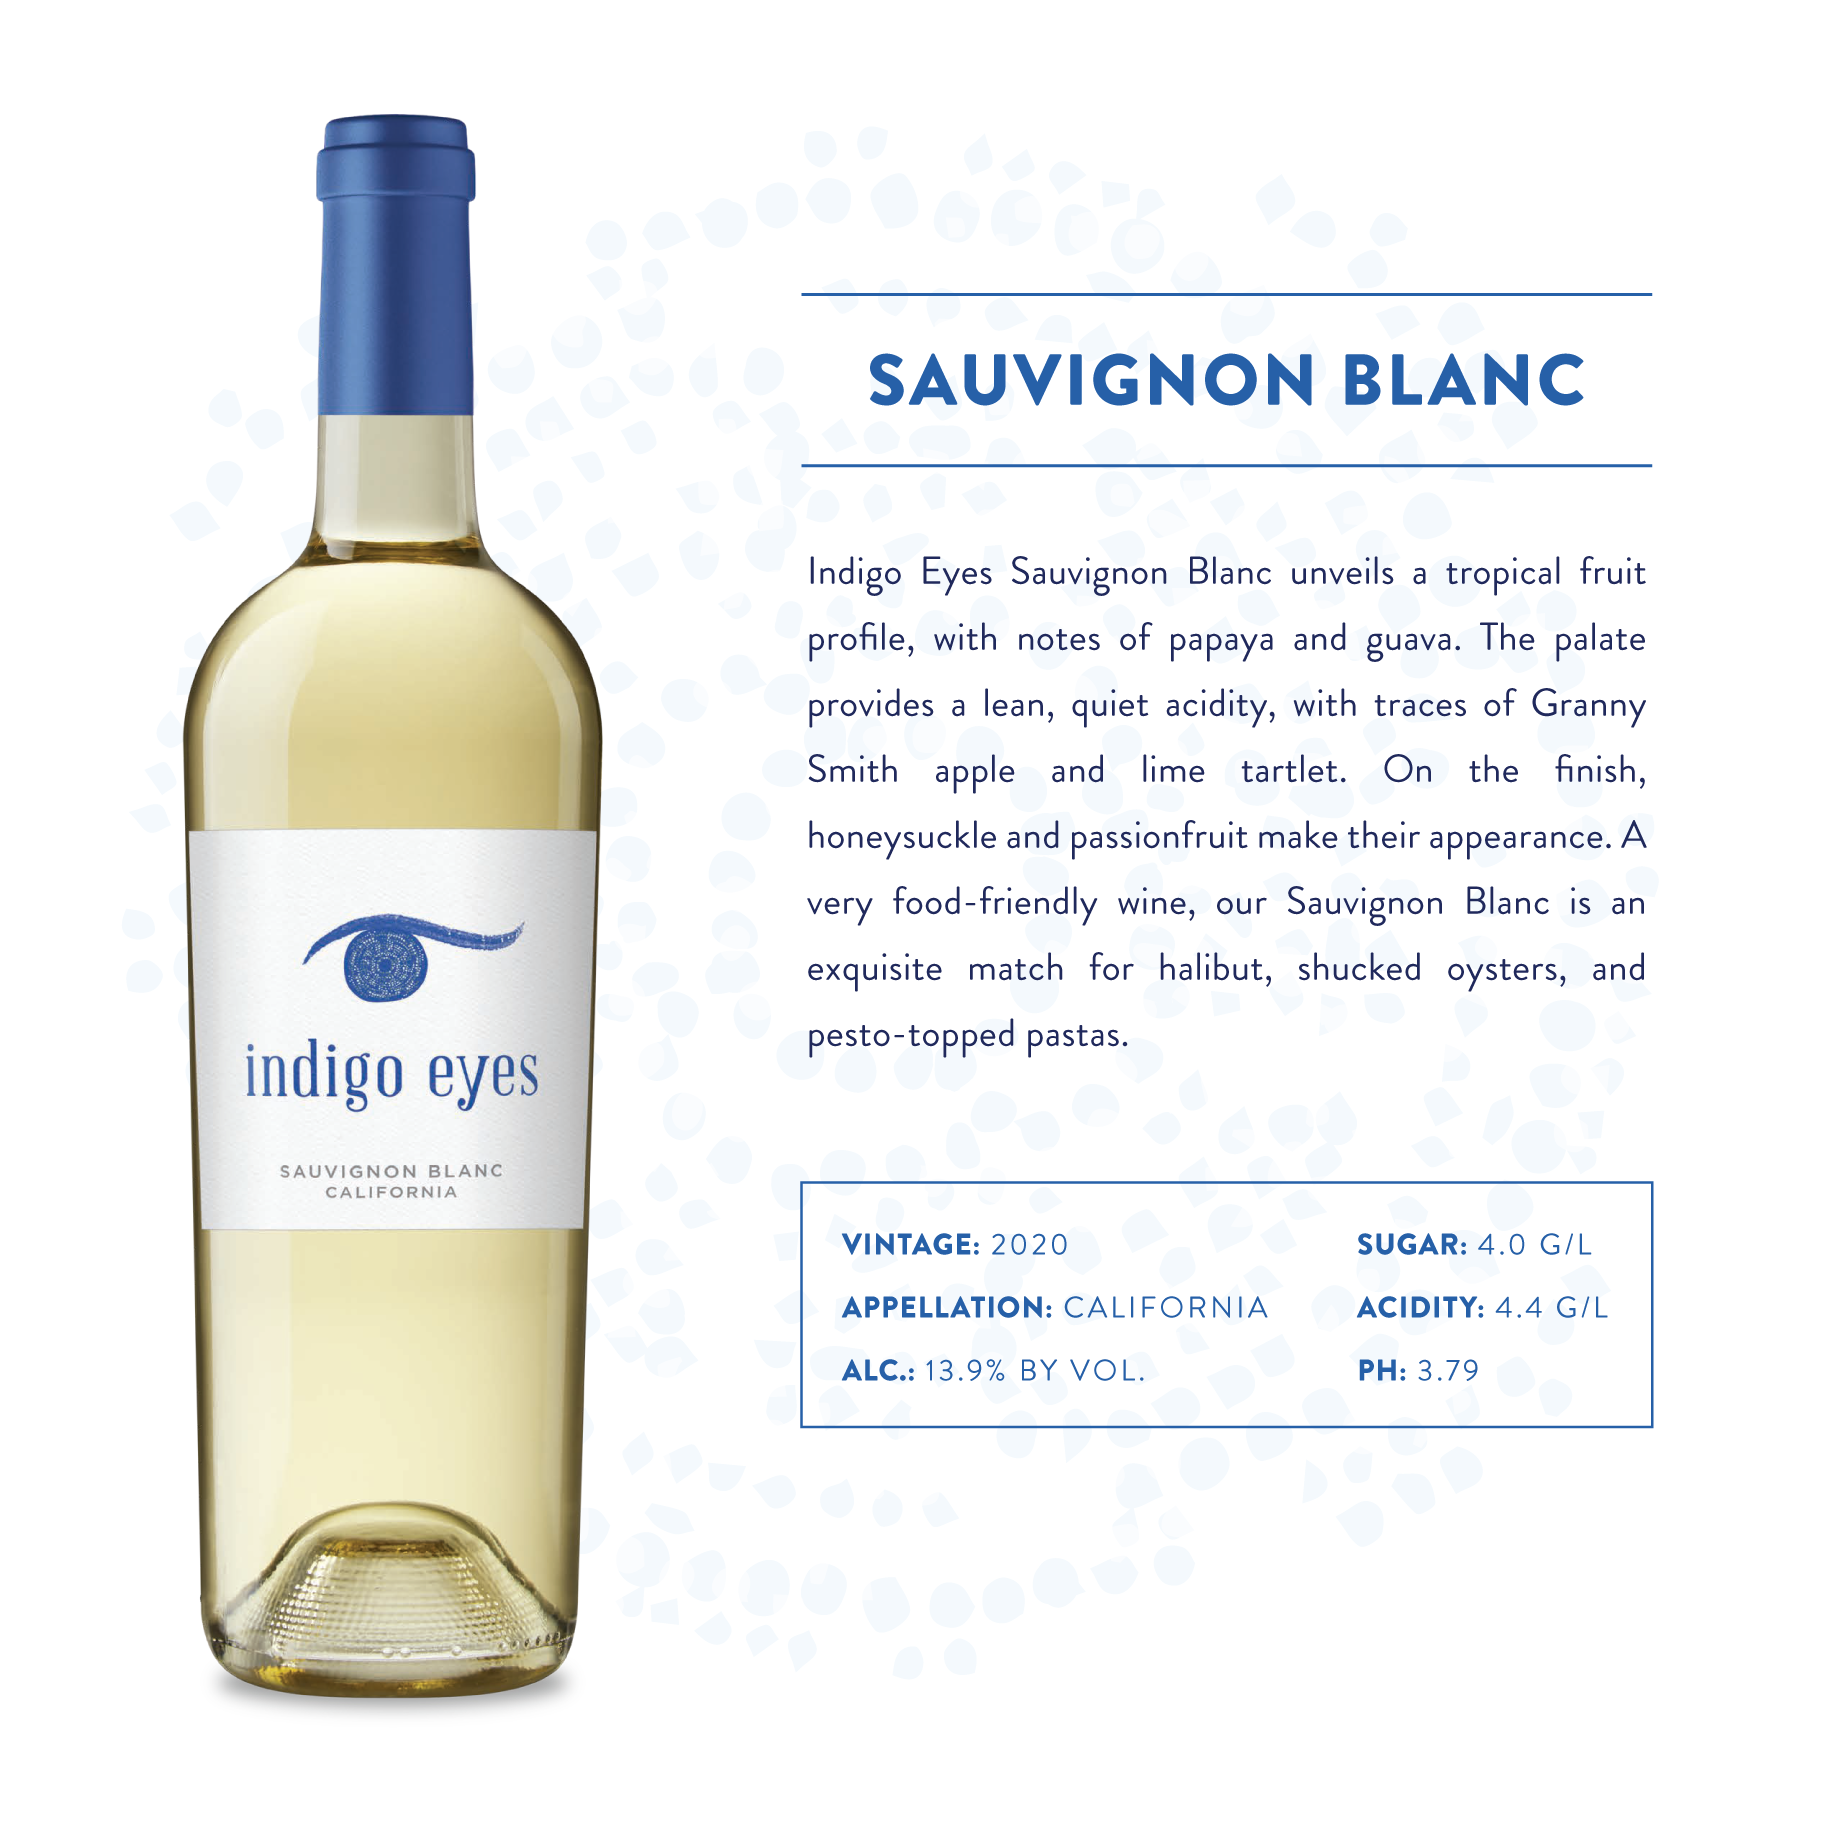 Indigo Eyes Sauvignon Blanc Product Page